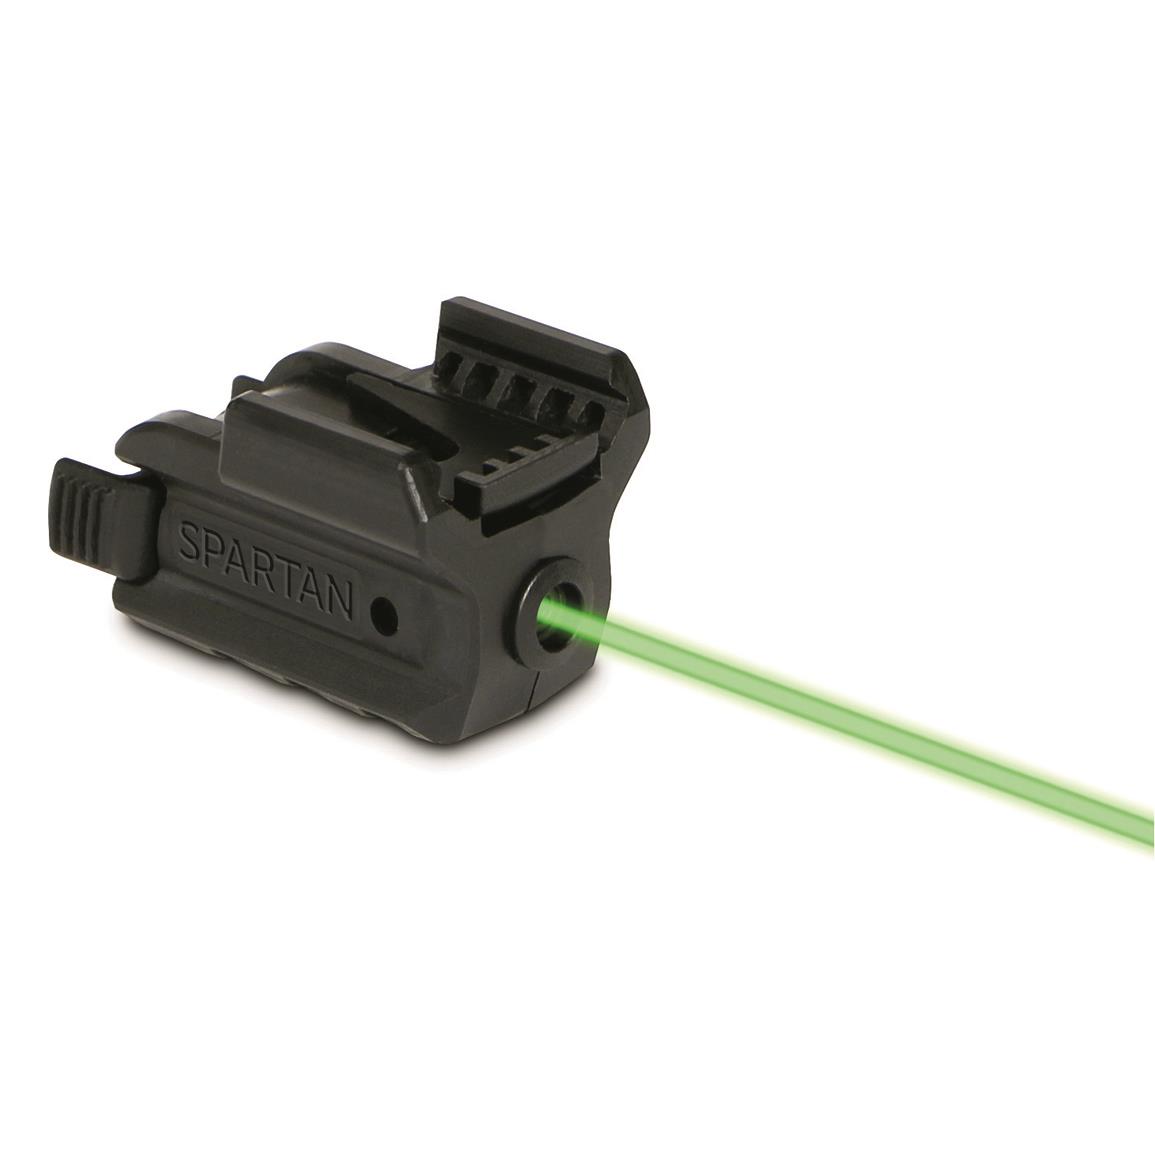 LaserMax Spartan Series SPS-G Adjustable Green Laser Sight